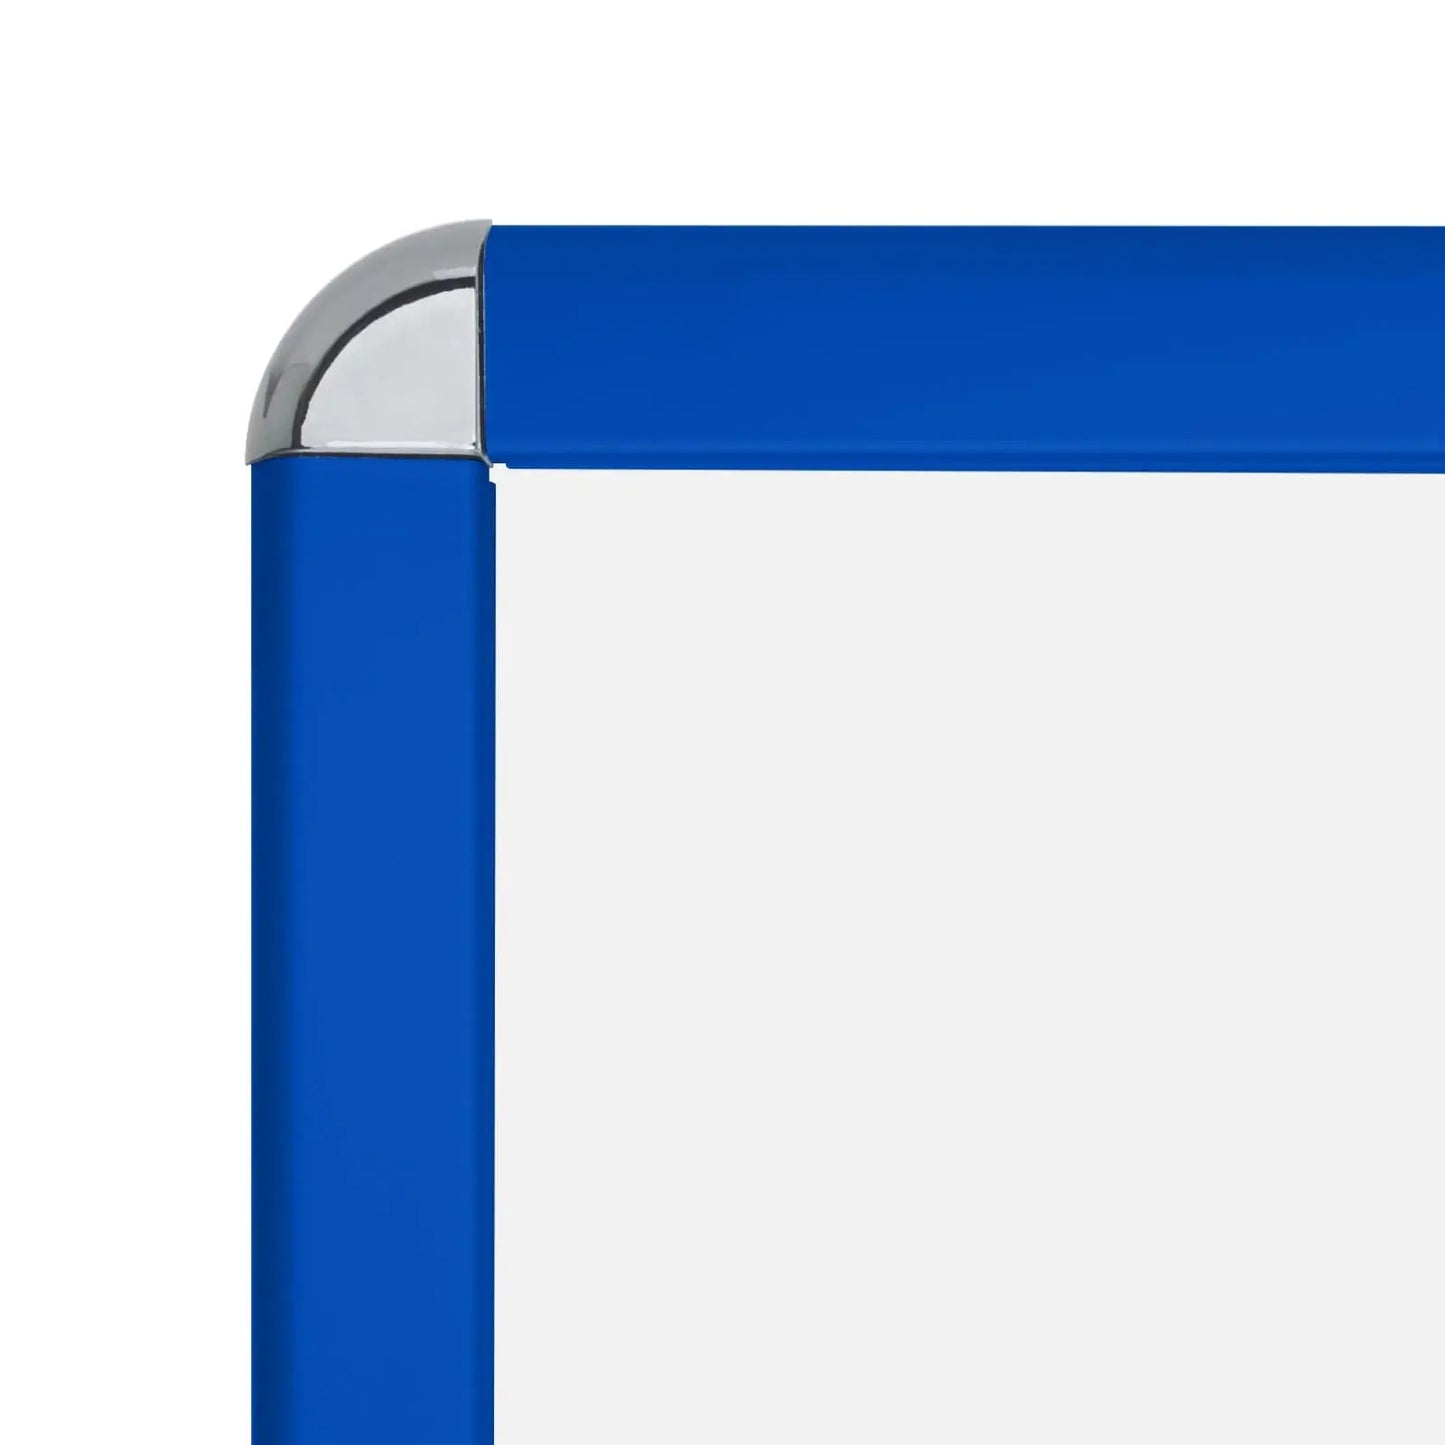 11x17 Blue SnapeZo® Round-Cornered - 1.25" Profile - Snap Frames Direct